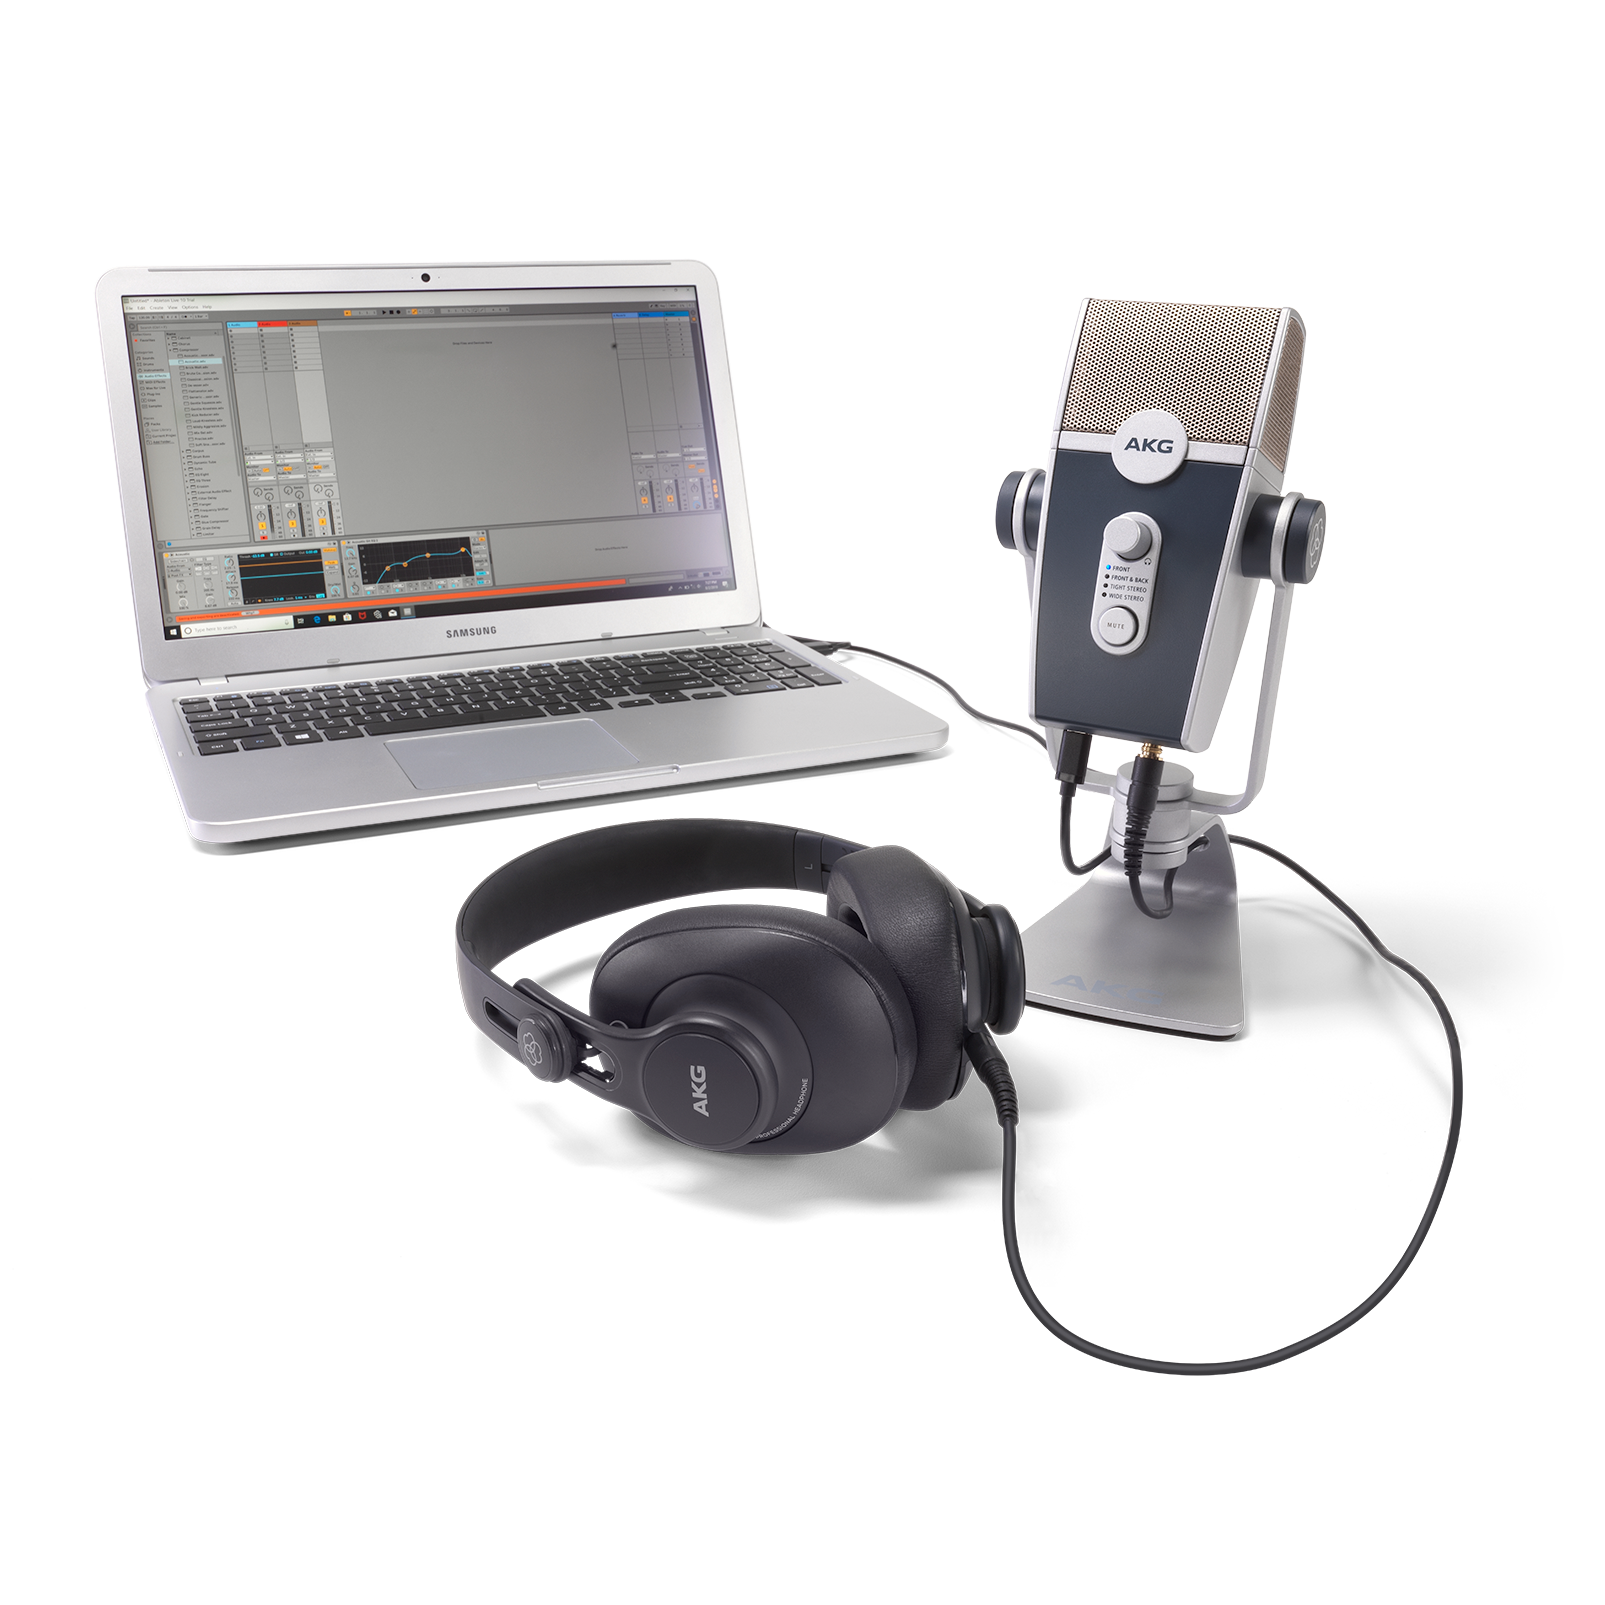 AKG Podcaster Essentials - Black / Gray - Audio Production Toolkit: AKG Lyra USB Microphone and AKG K371 Headphones - Detailshot 2